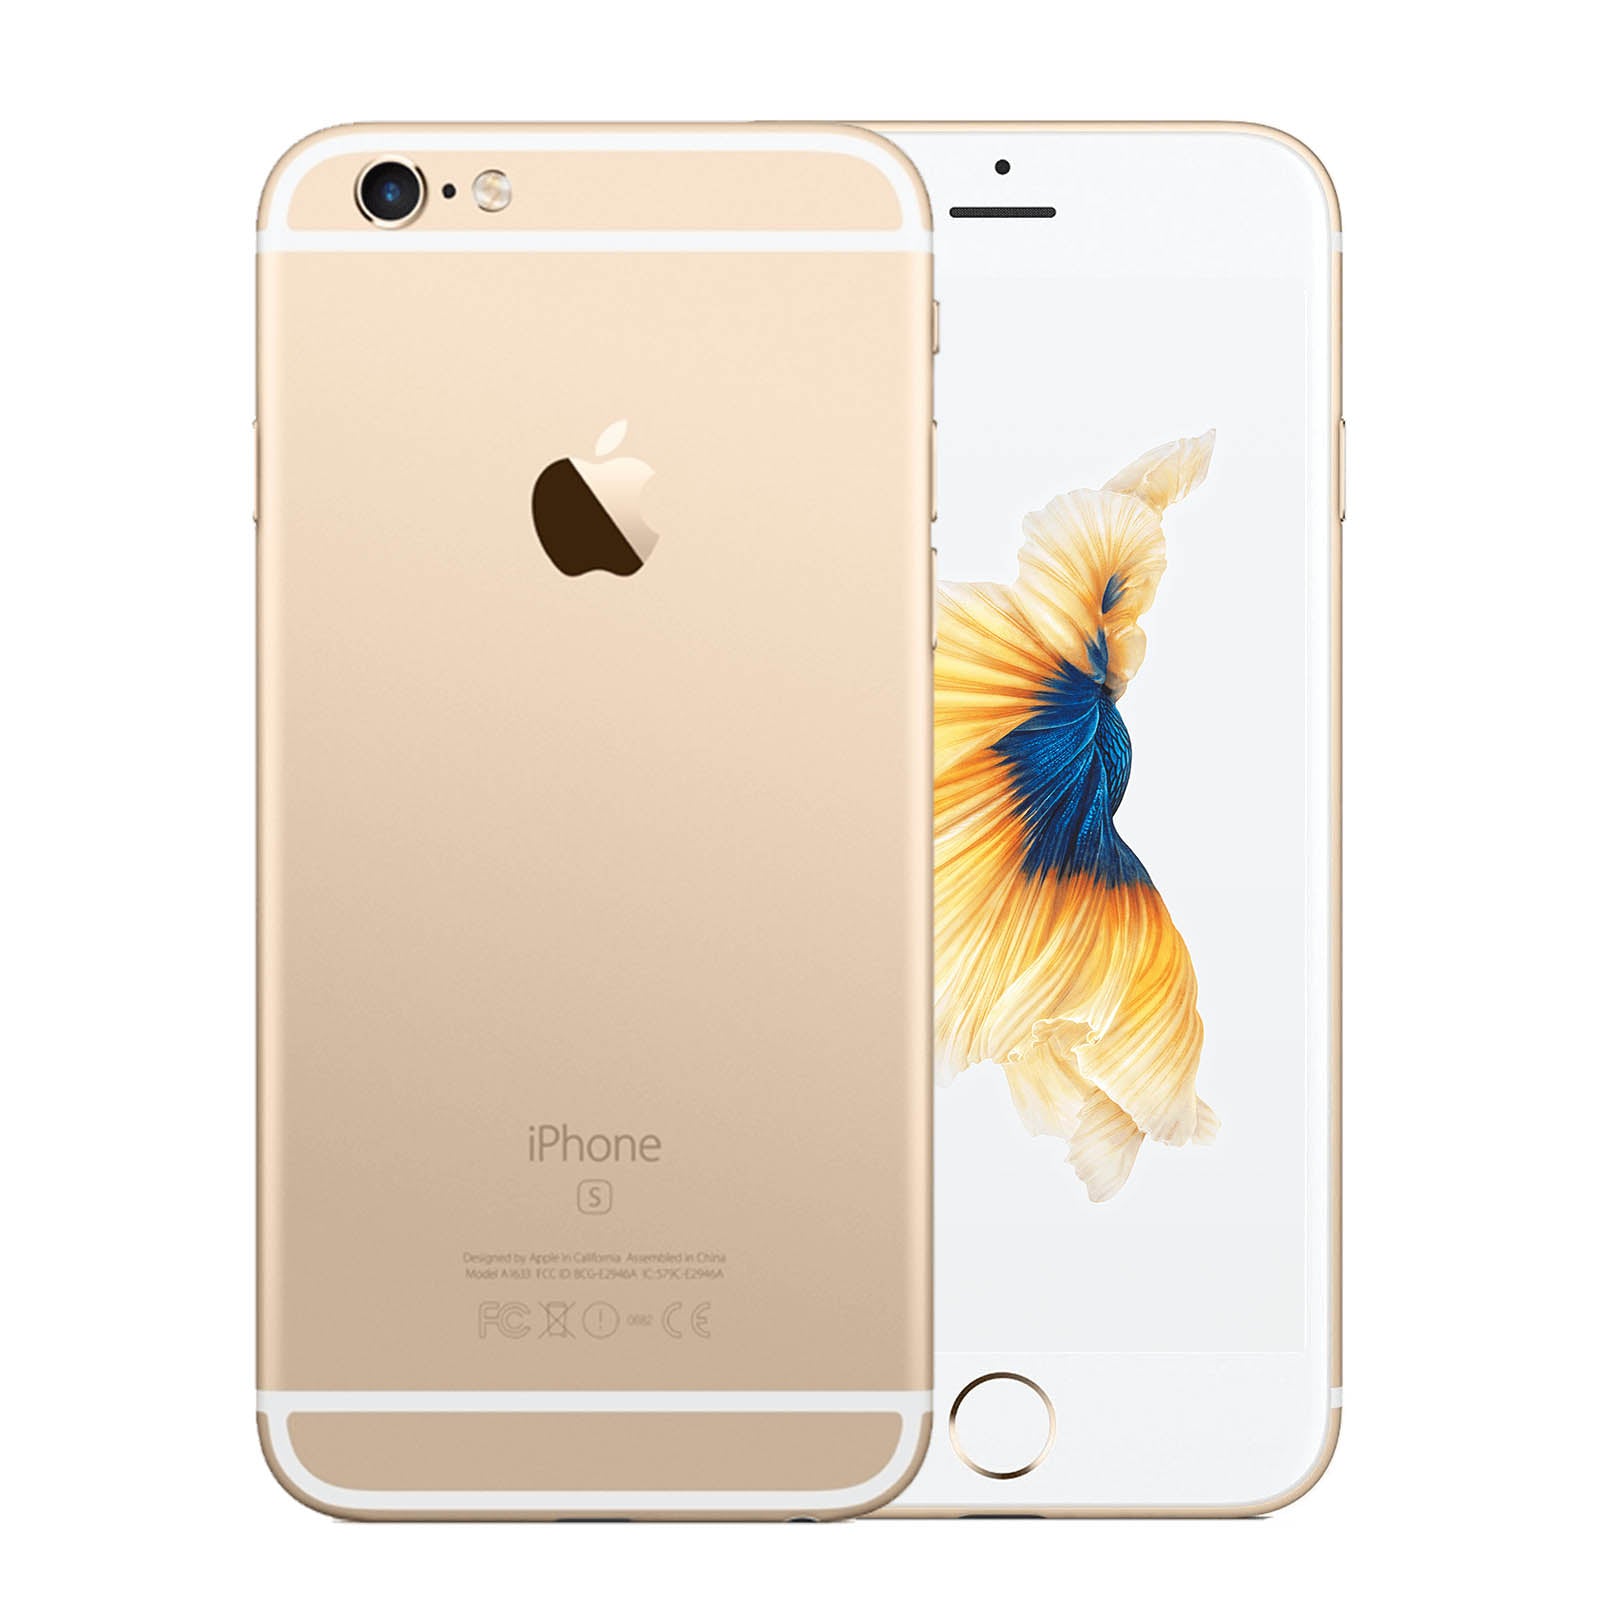 Apple iPhone 6S Plus 64GB Gold Very Good - Unlocked